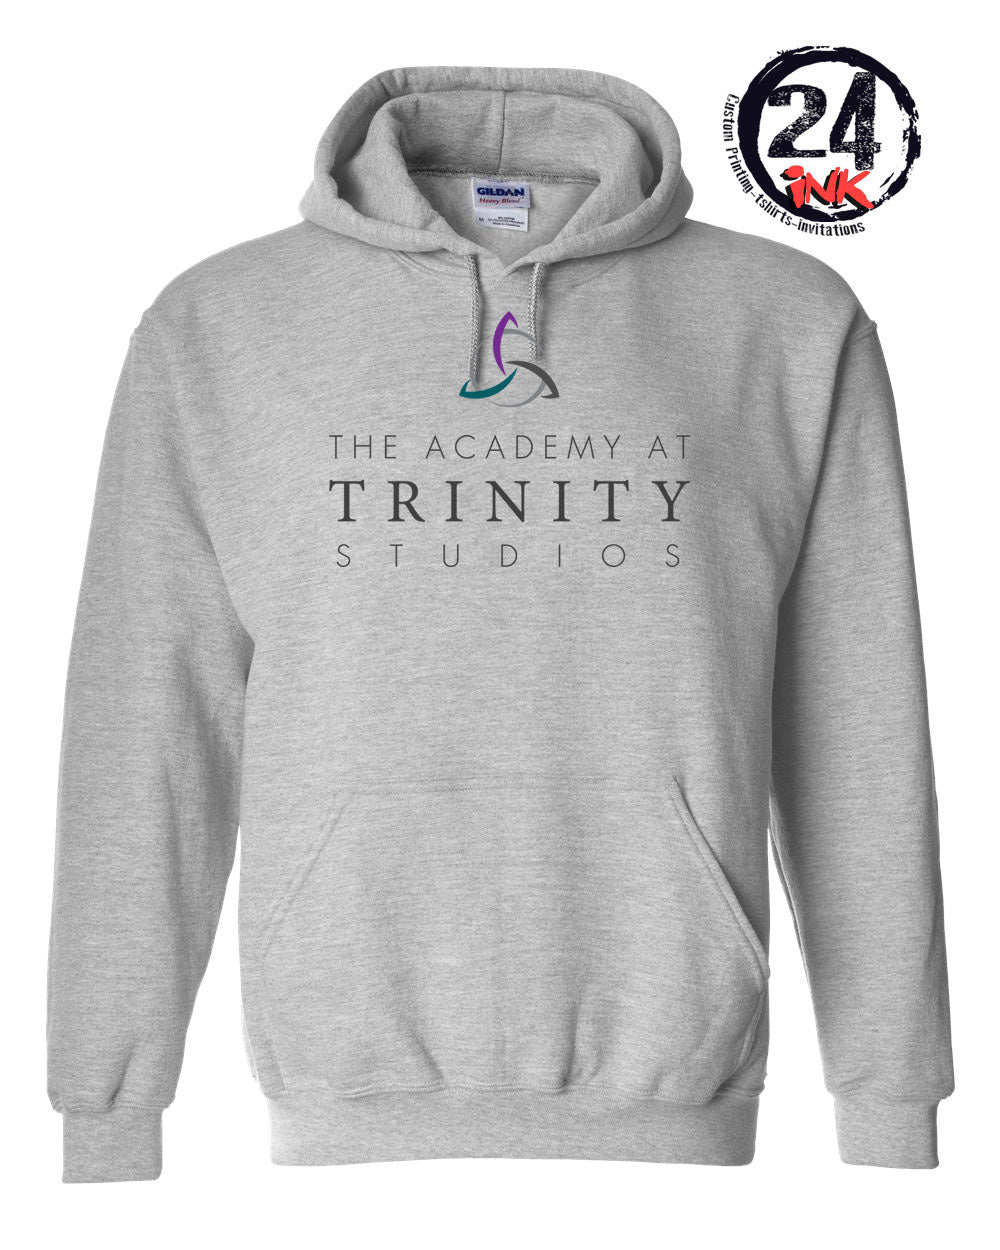 The Academy at Trinity Hooded Sweatshirt